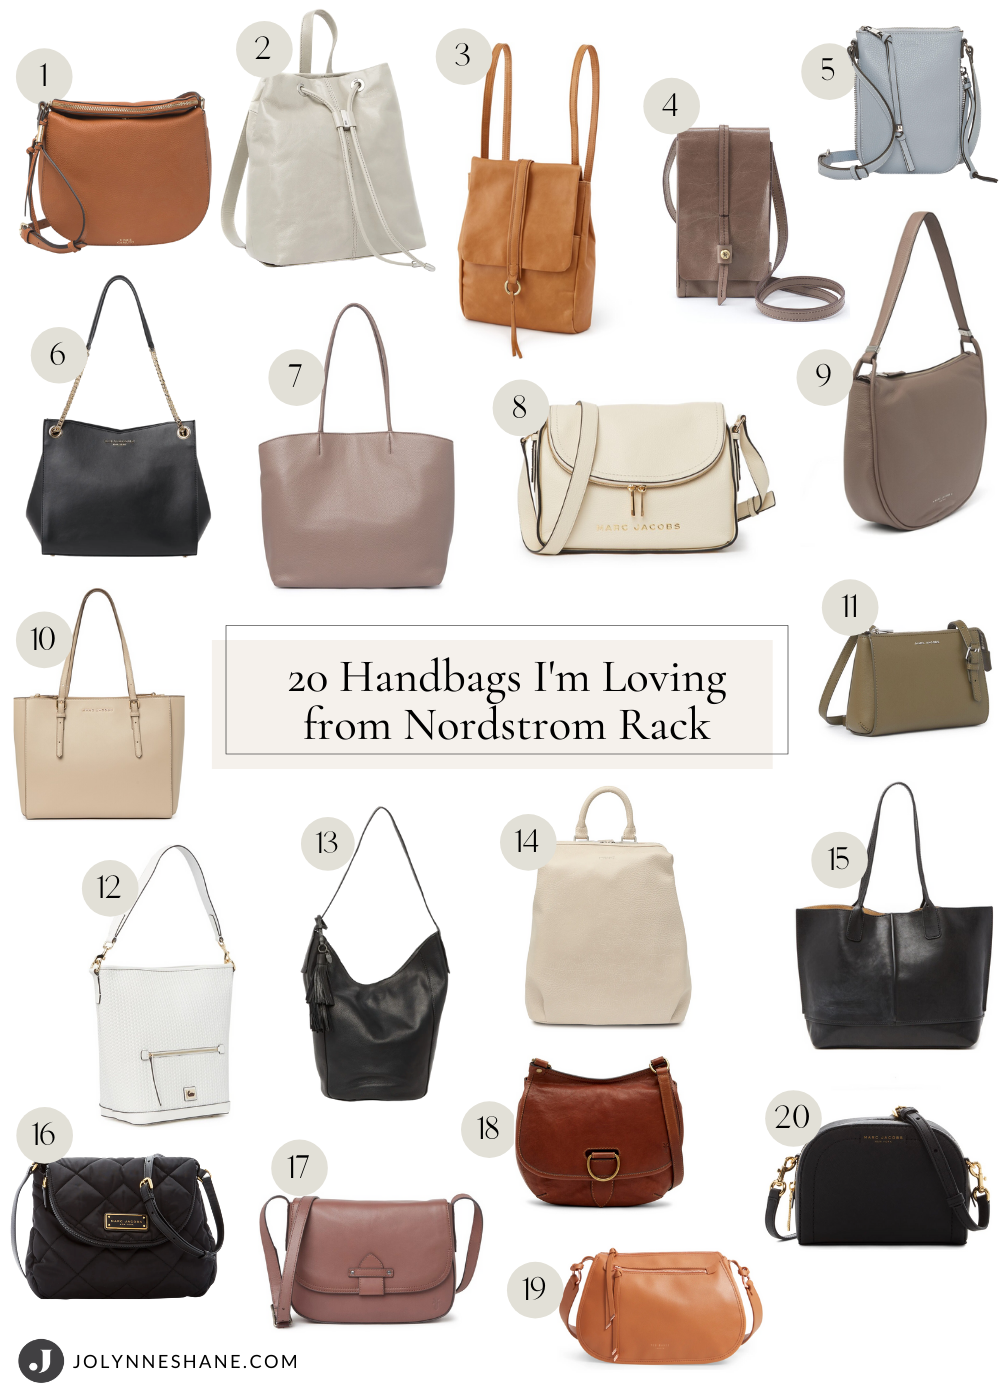 20 Handbags for Fall from Nordstrom Rack